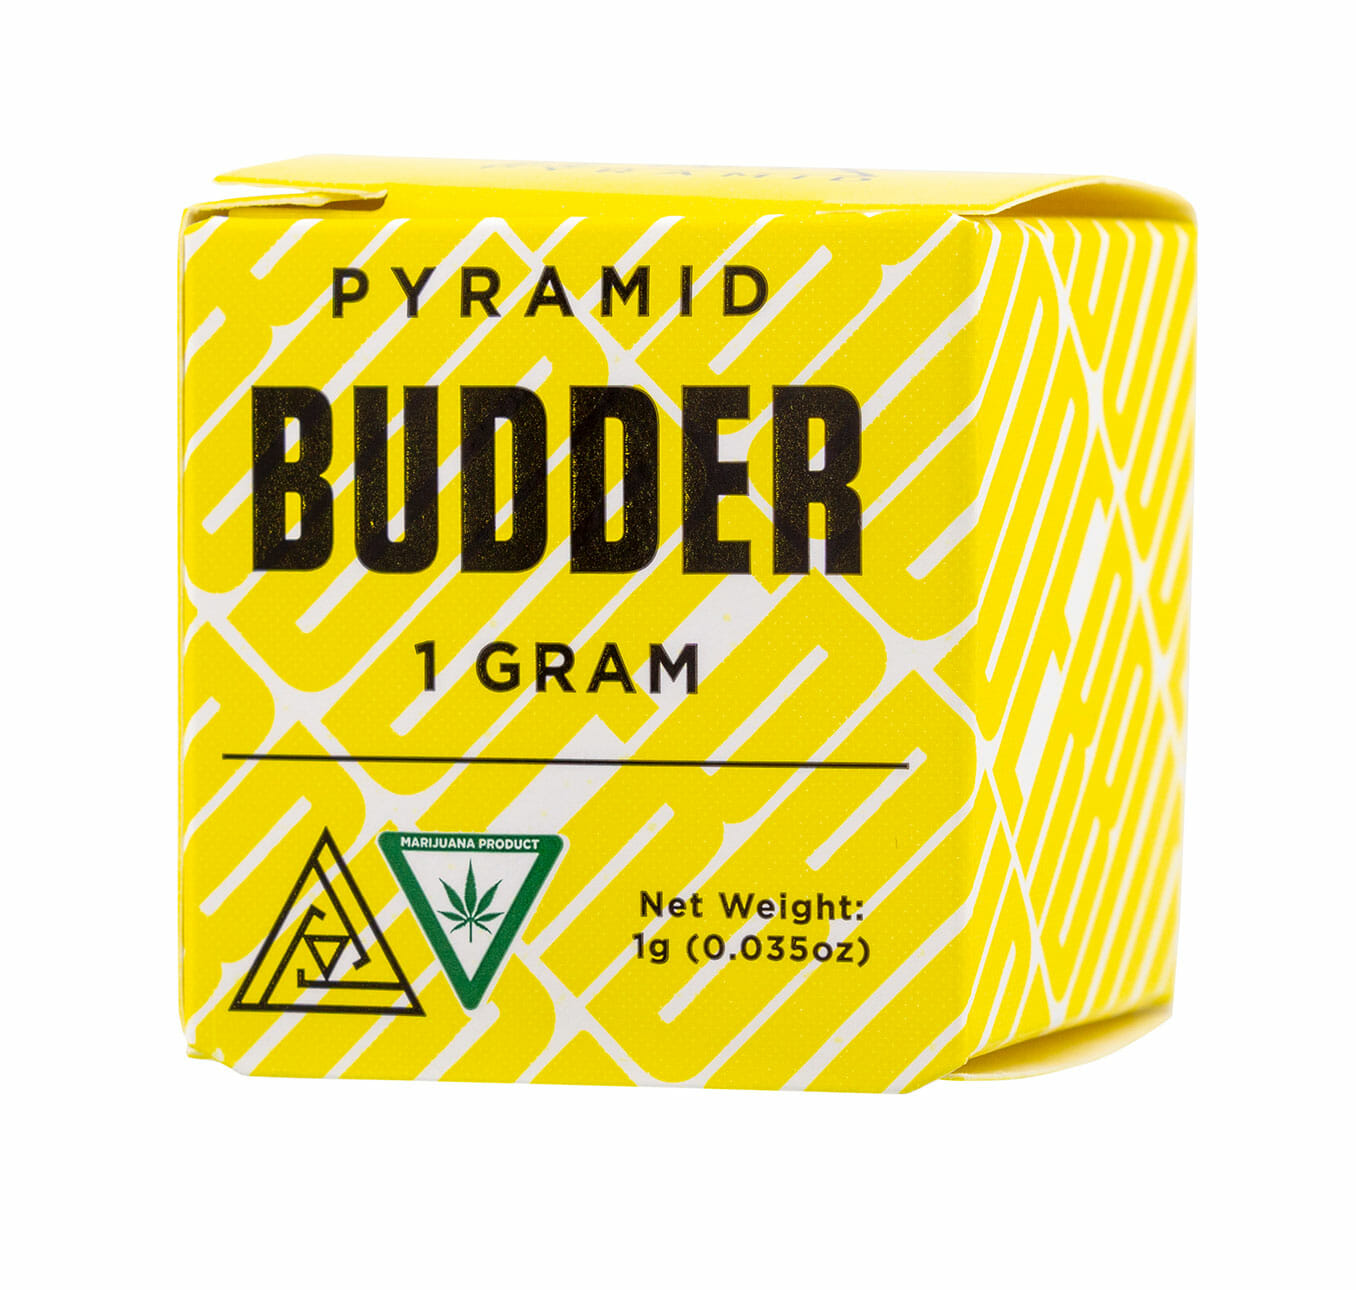 Pyramid Budder Cannabis extract 1 gram